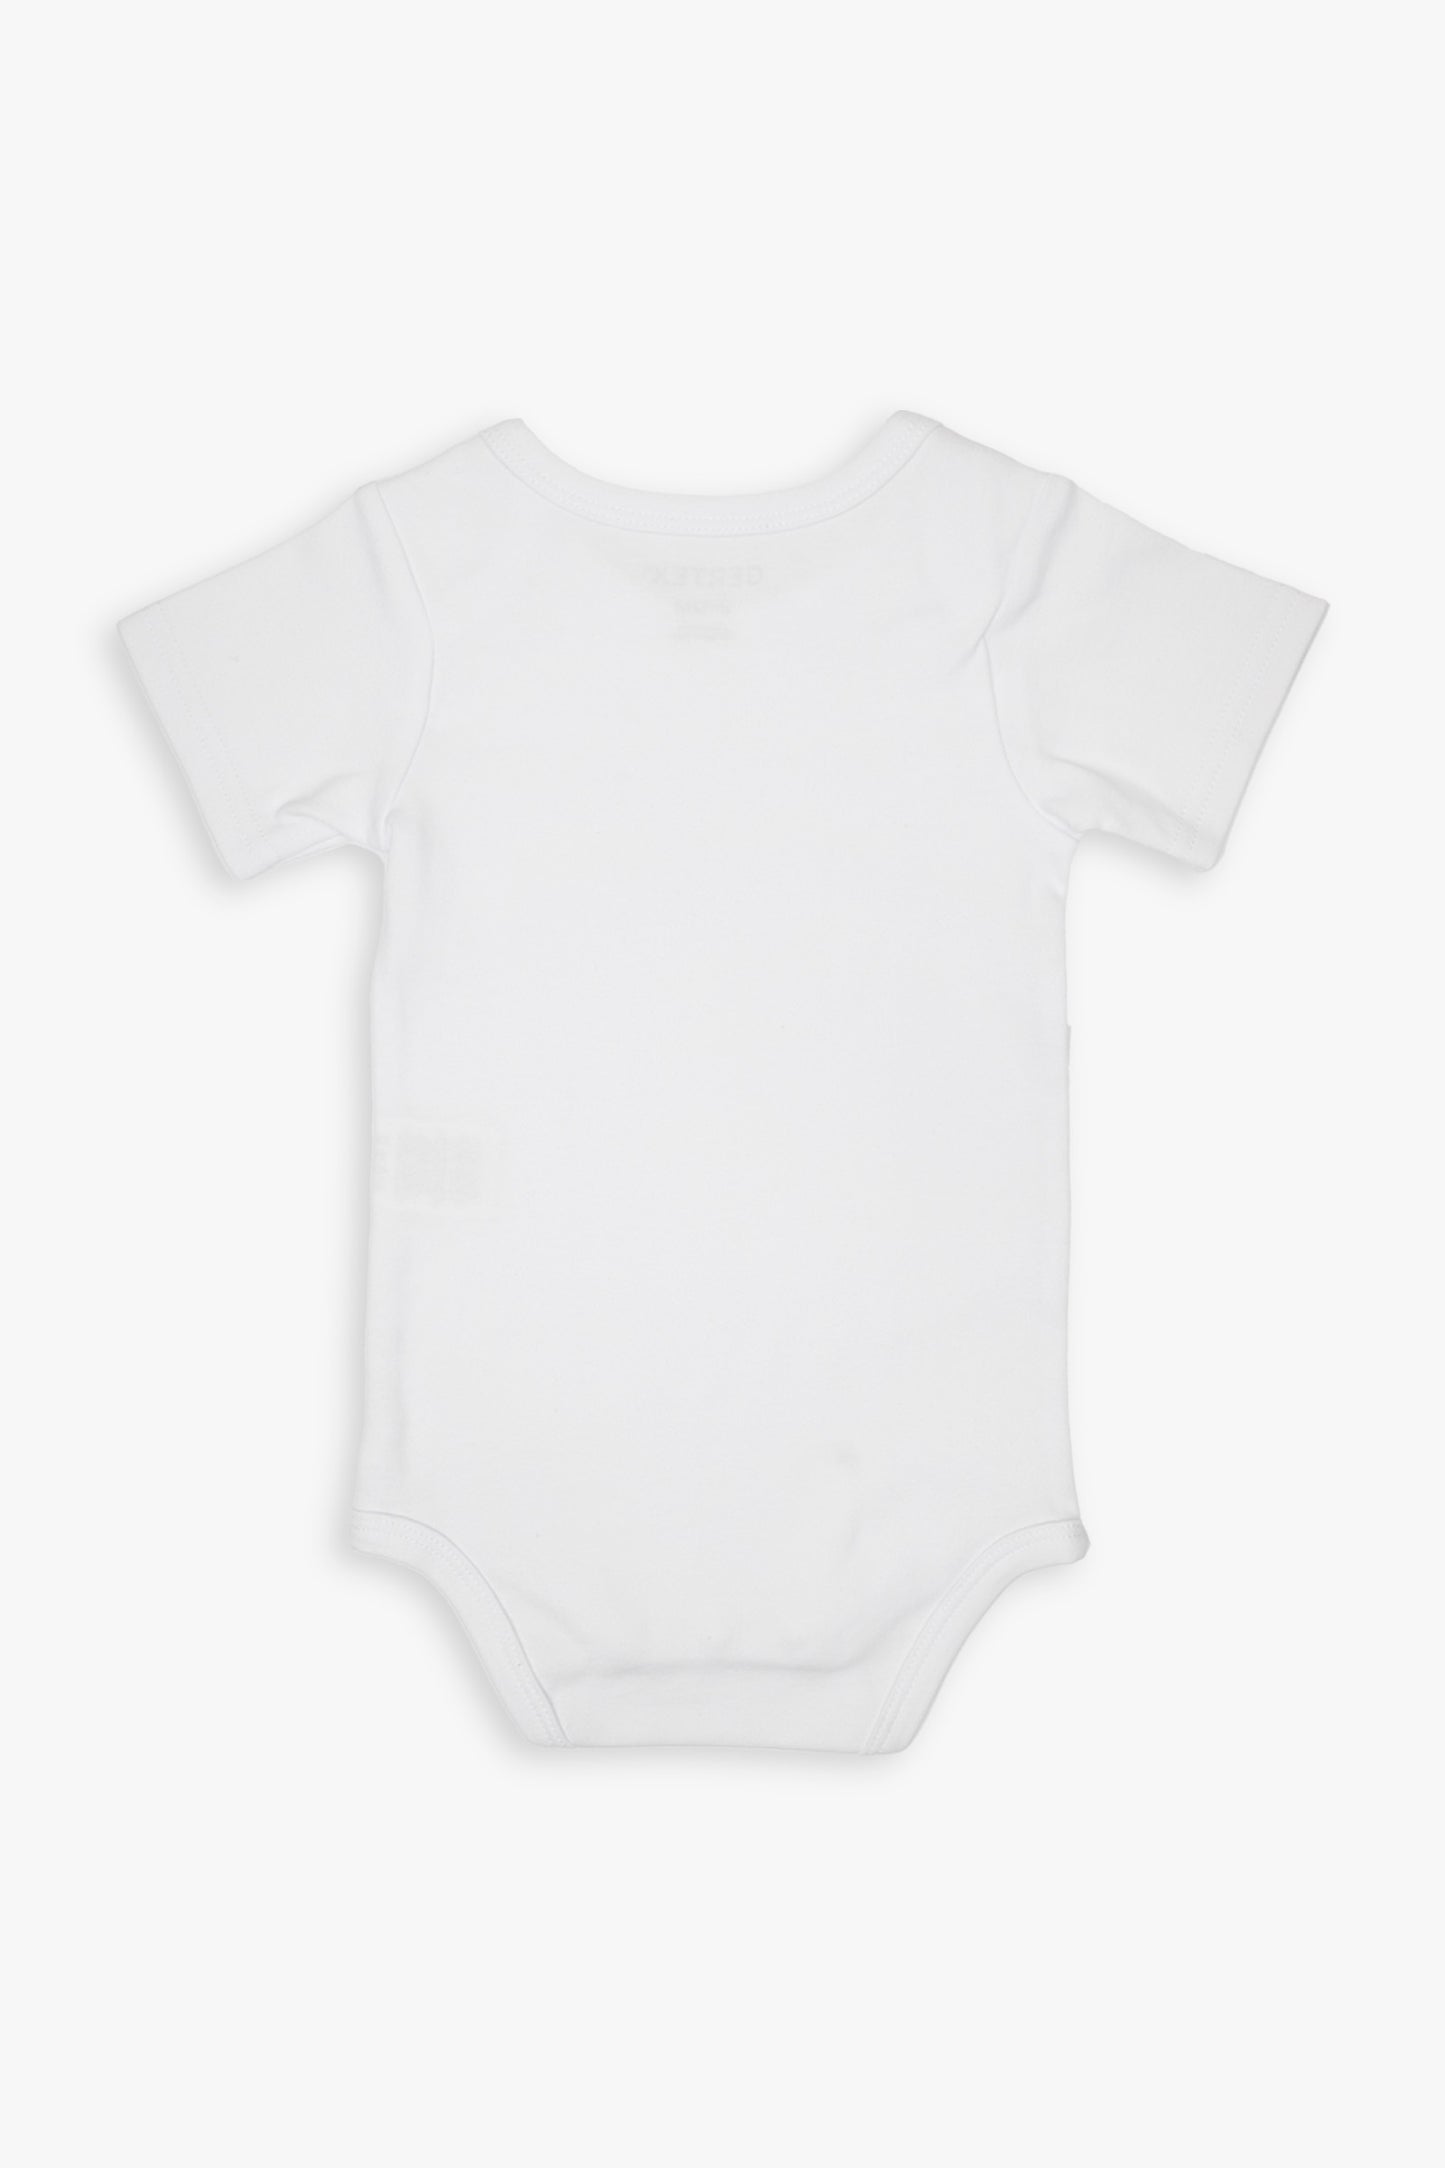 Unisex Baby Short Sleeve Bodysuit With Snaps Multipack